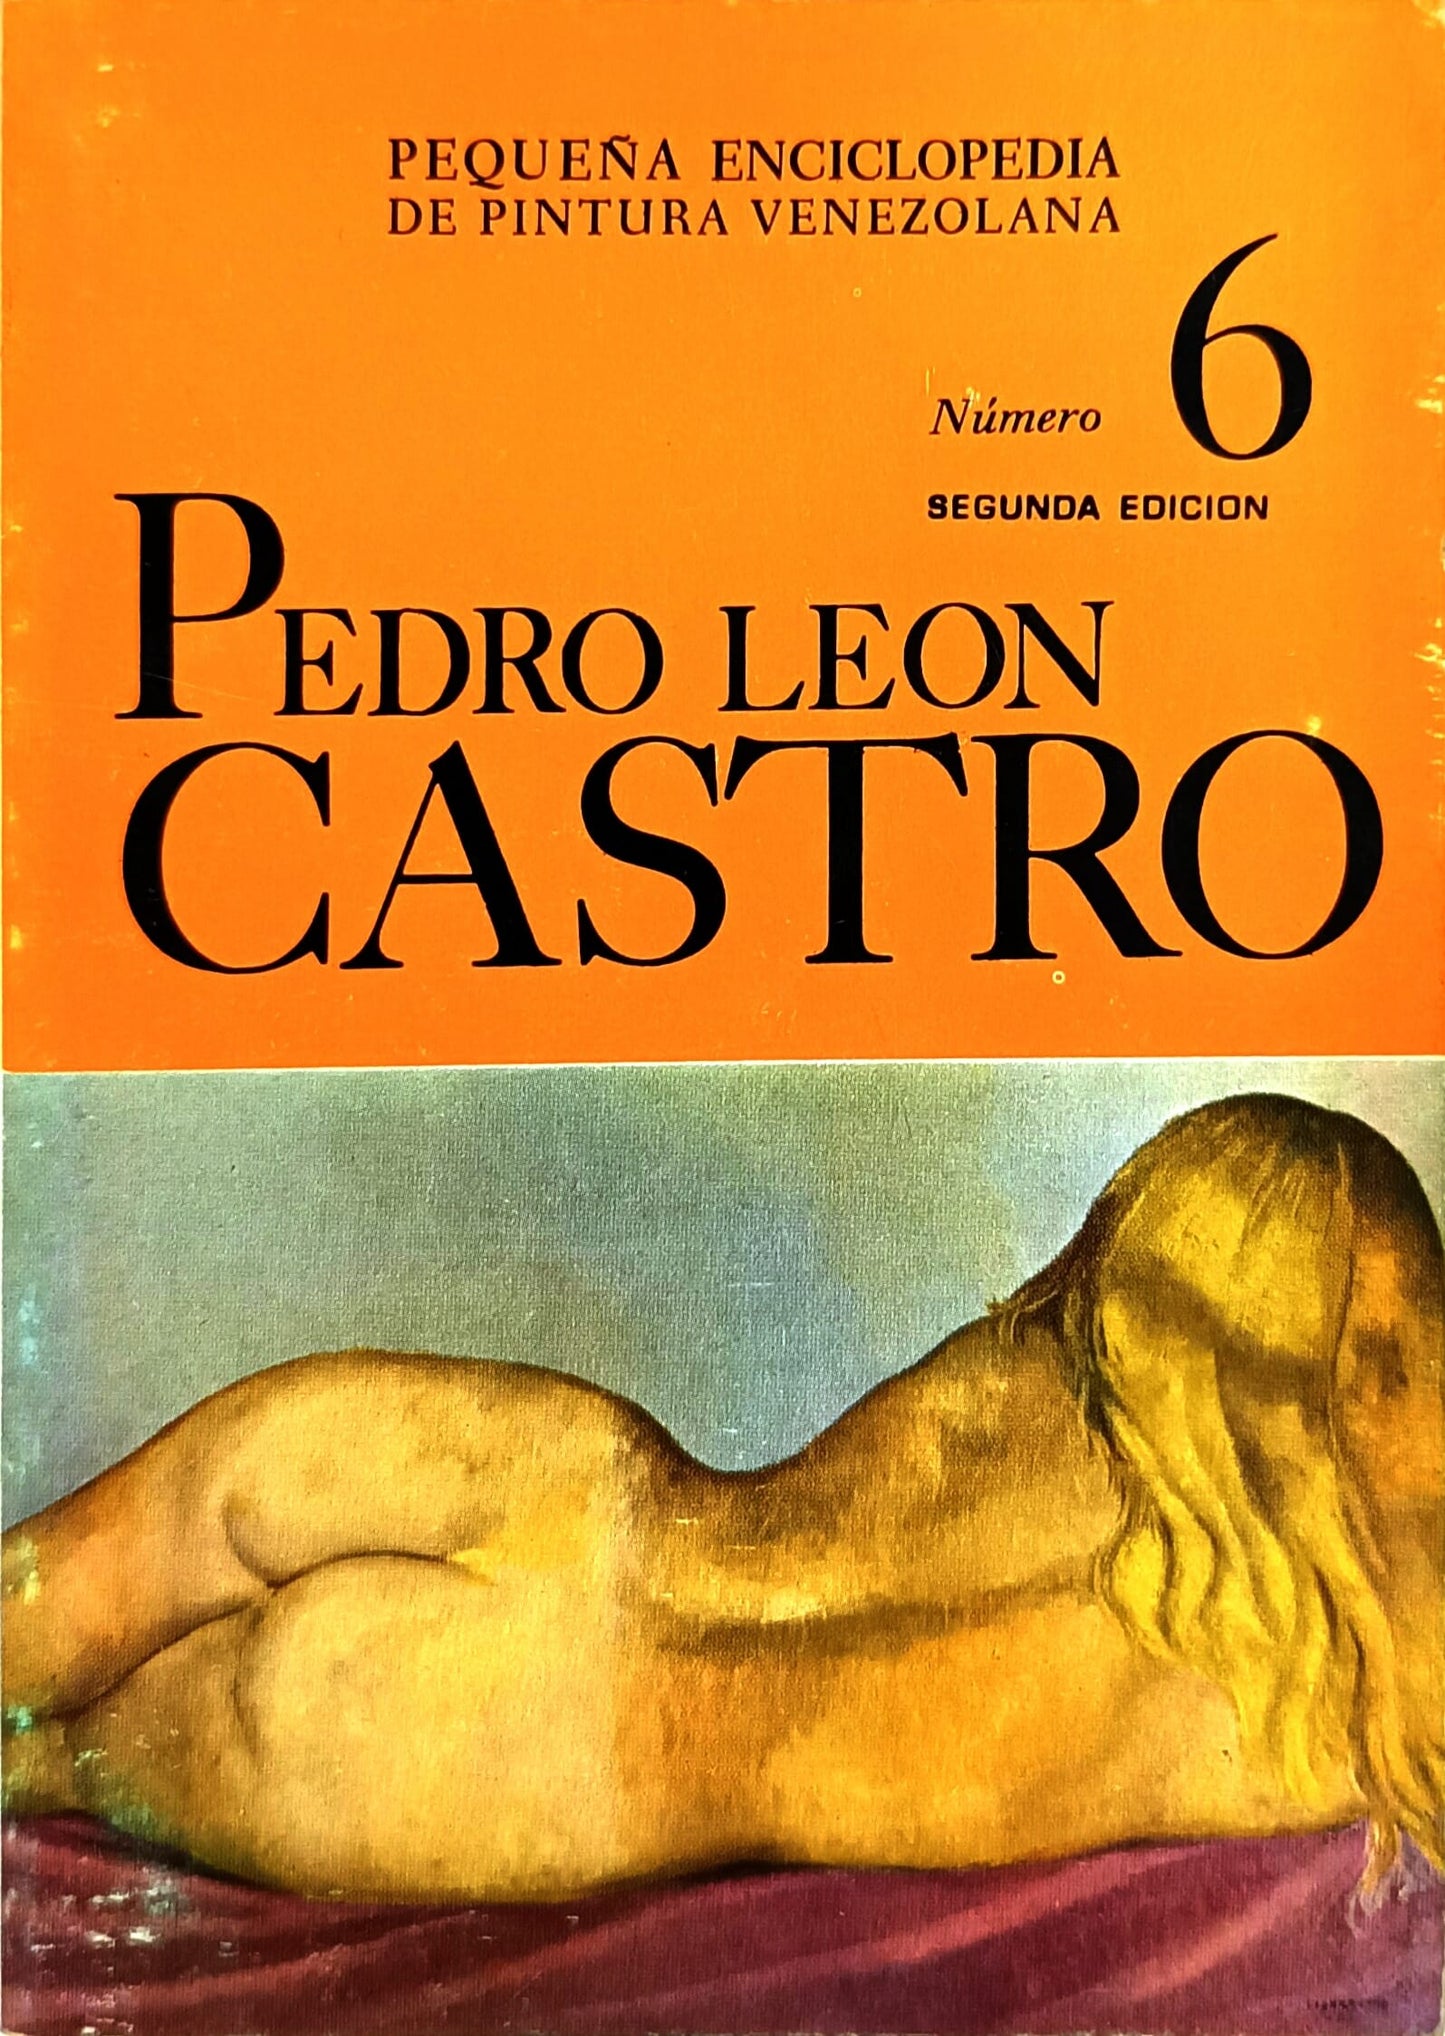 Pedro León Castro. Pequeña Enciclopedia de Pintura Venezolana. Número 6